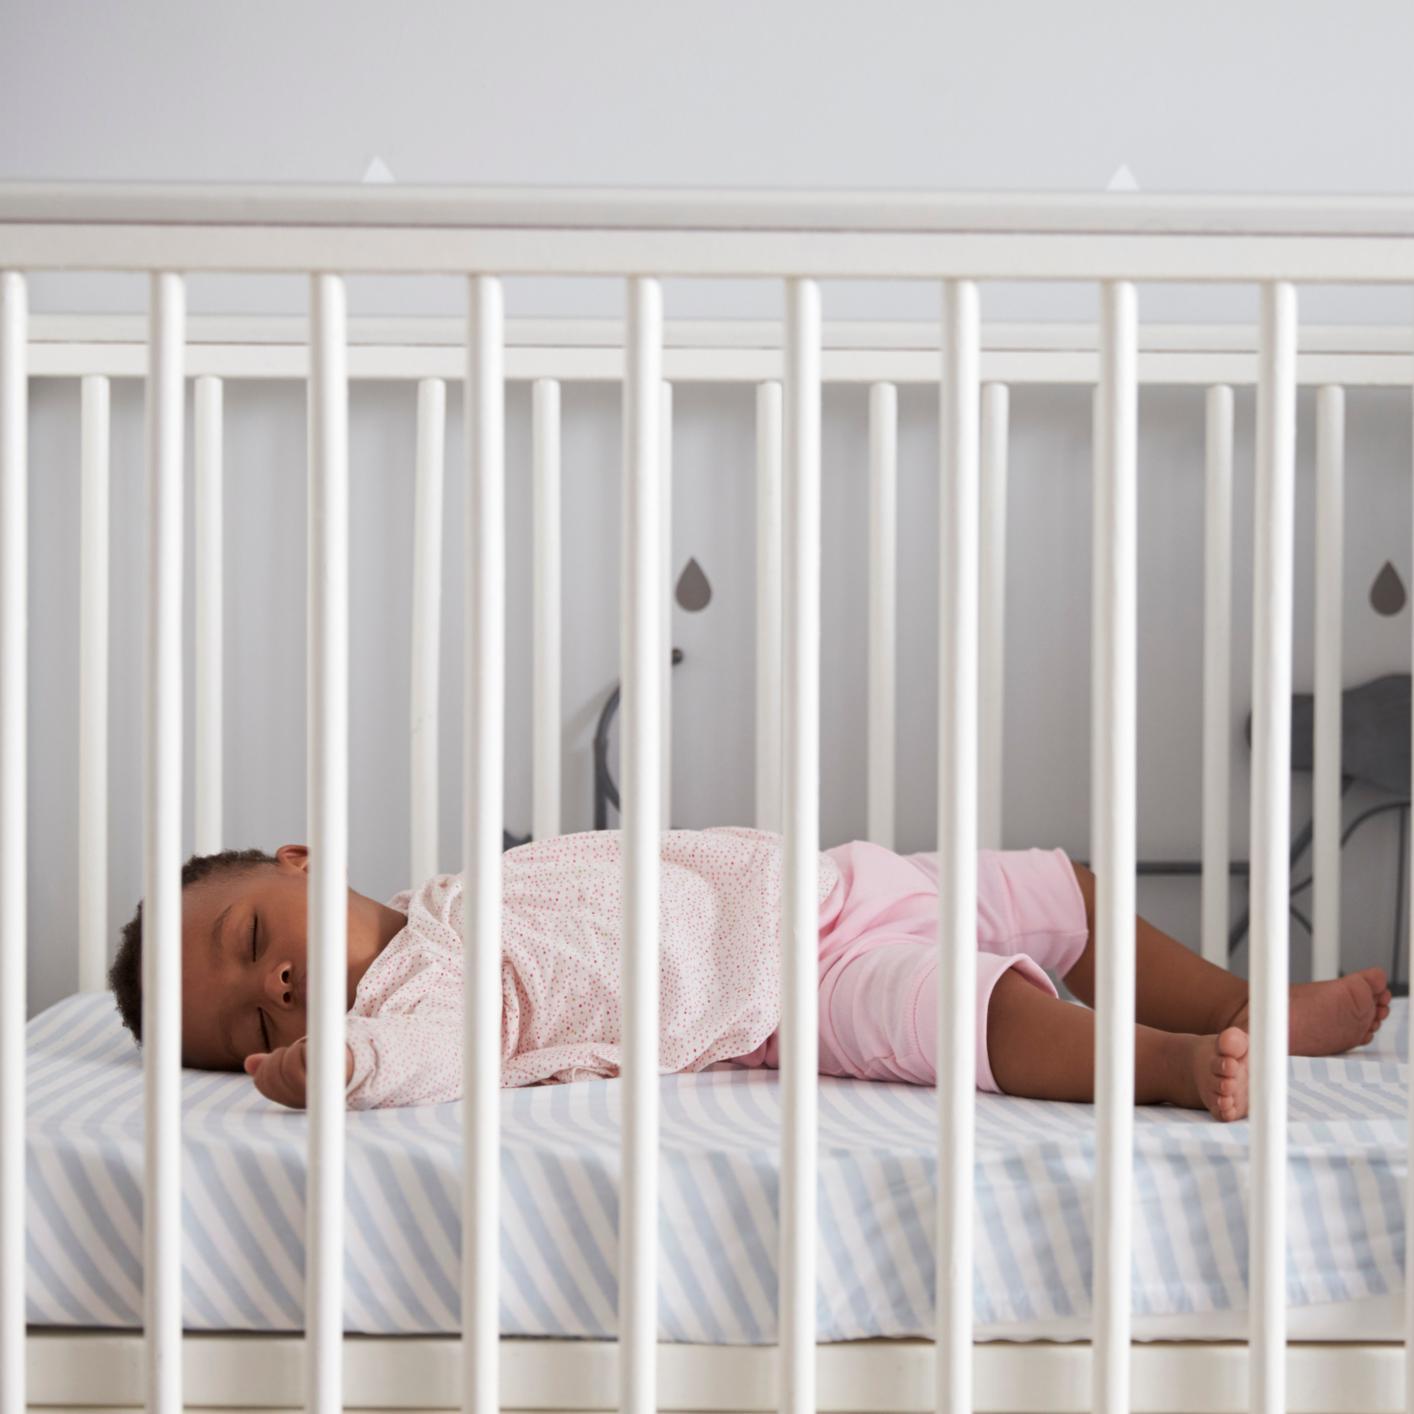 SAFE SLEEP: Choosing the Best Sleep Surface for Your Baby